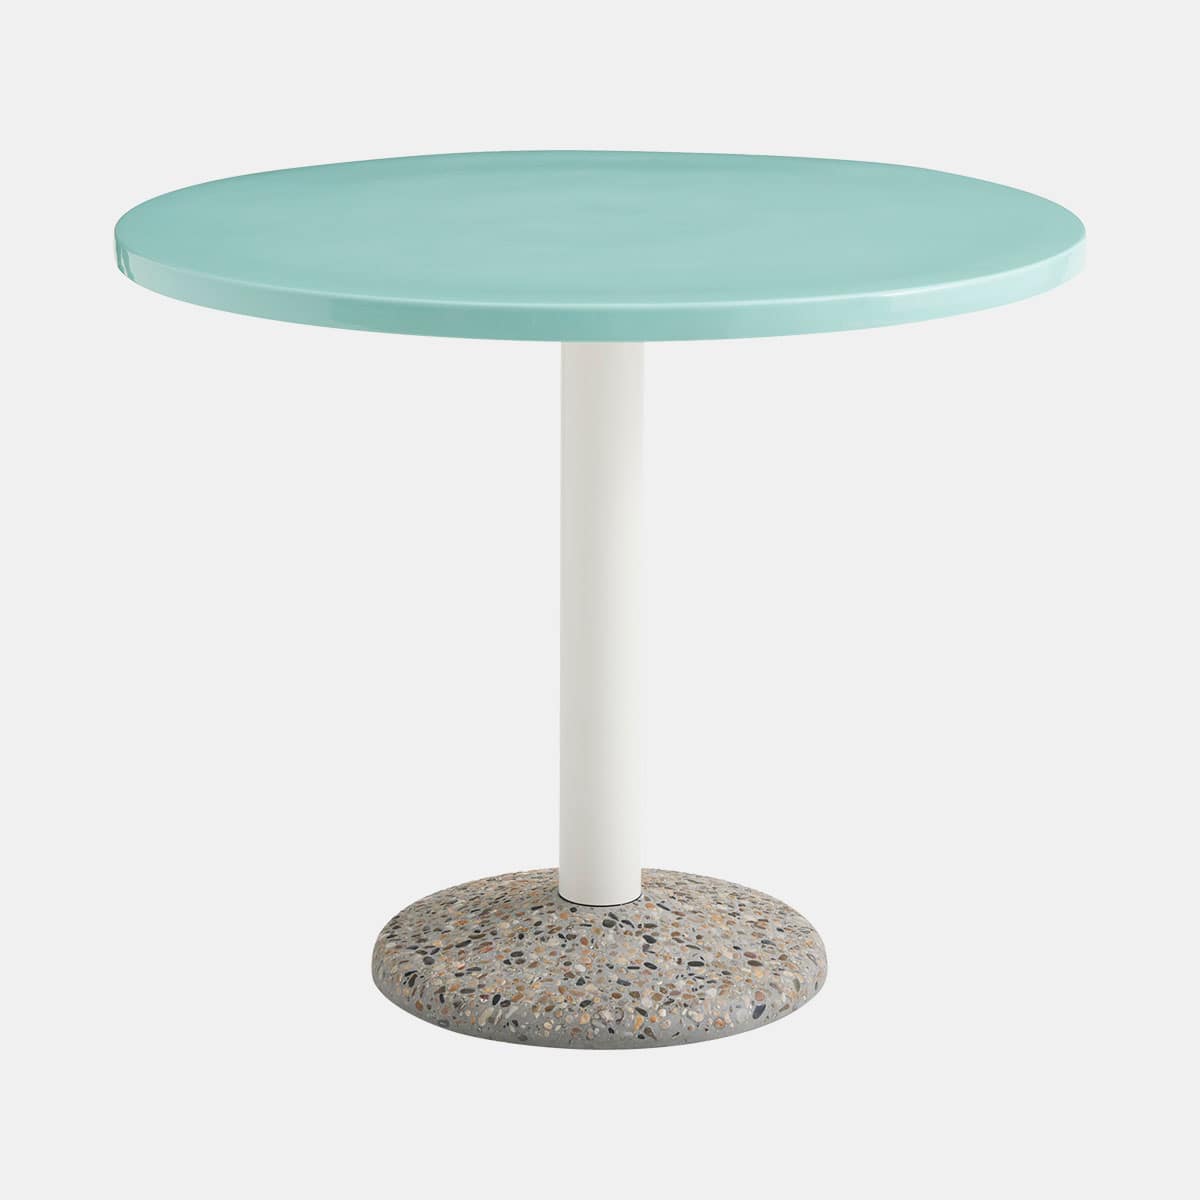 hay-muller-van-severen-ceramic-table-outdoor-90x74-light-mint-cream-white-concrete-001shop